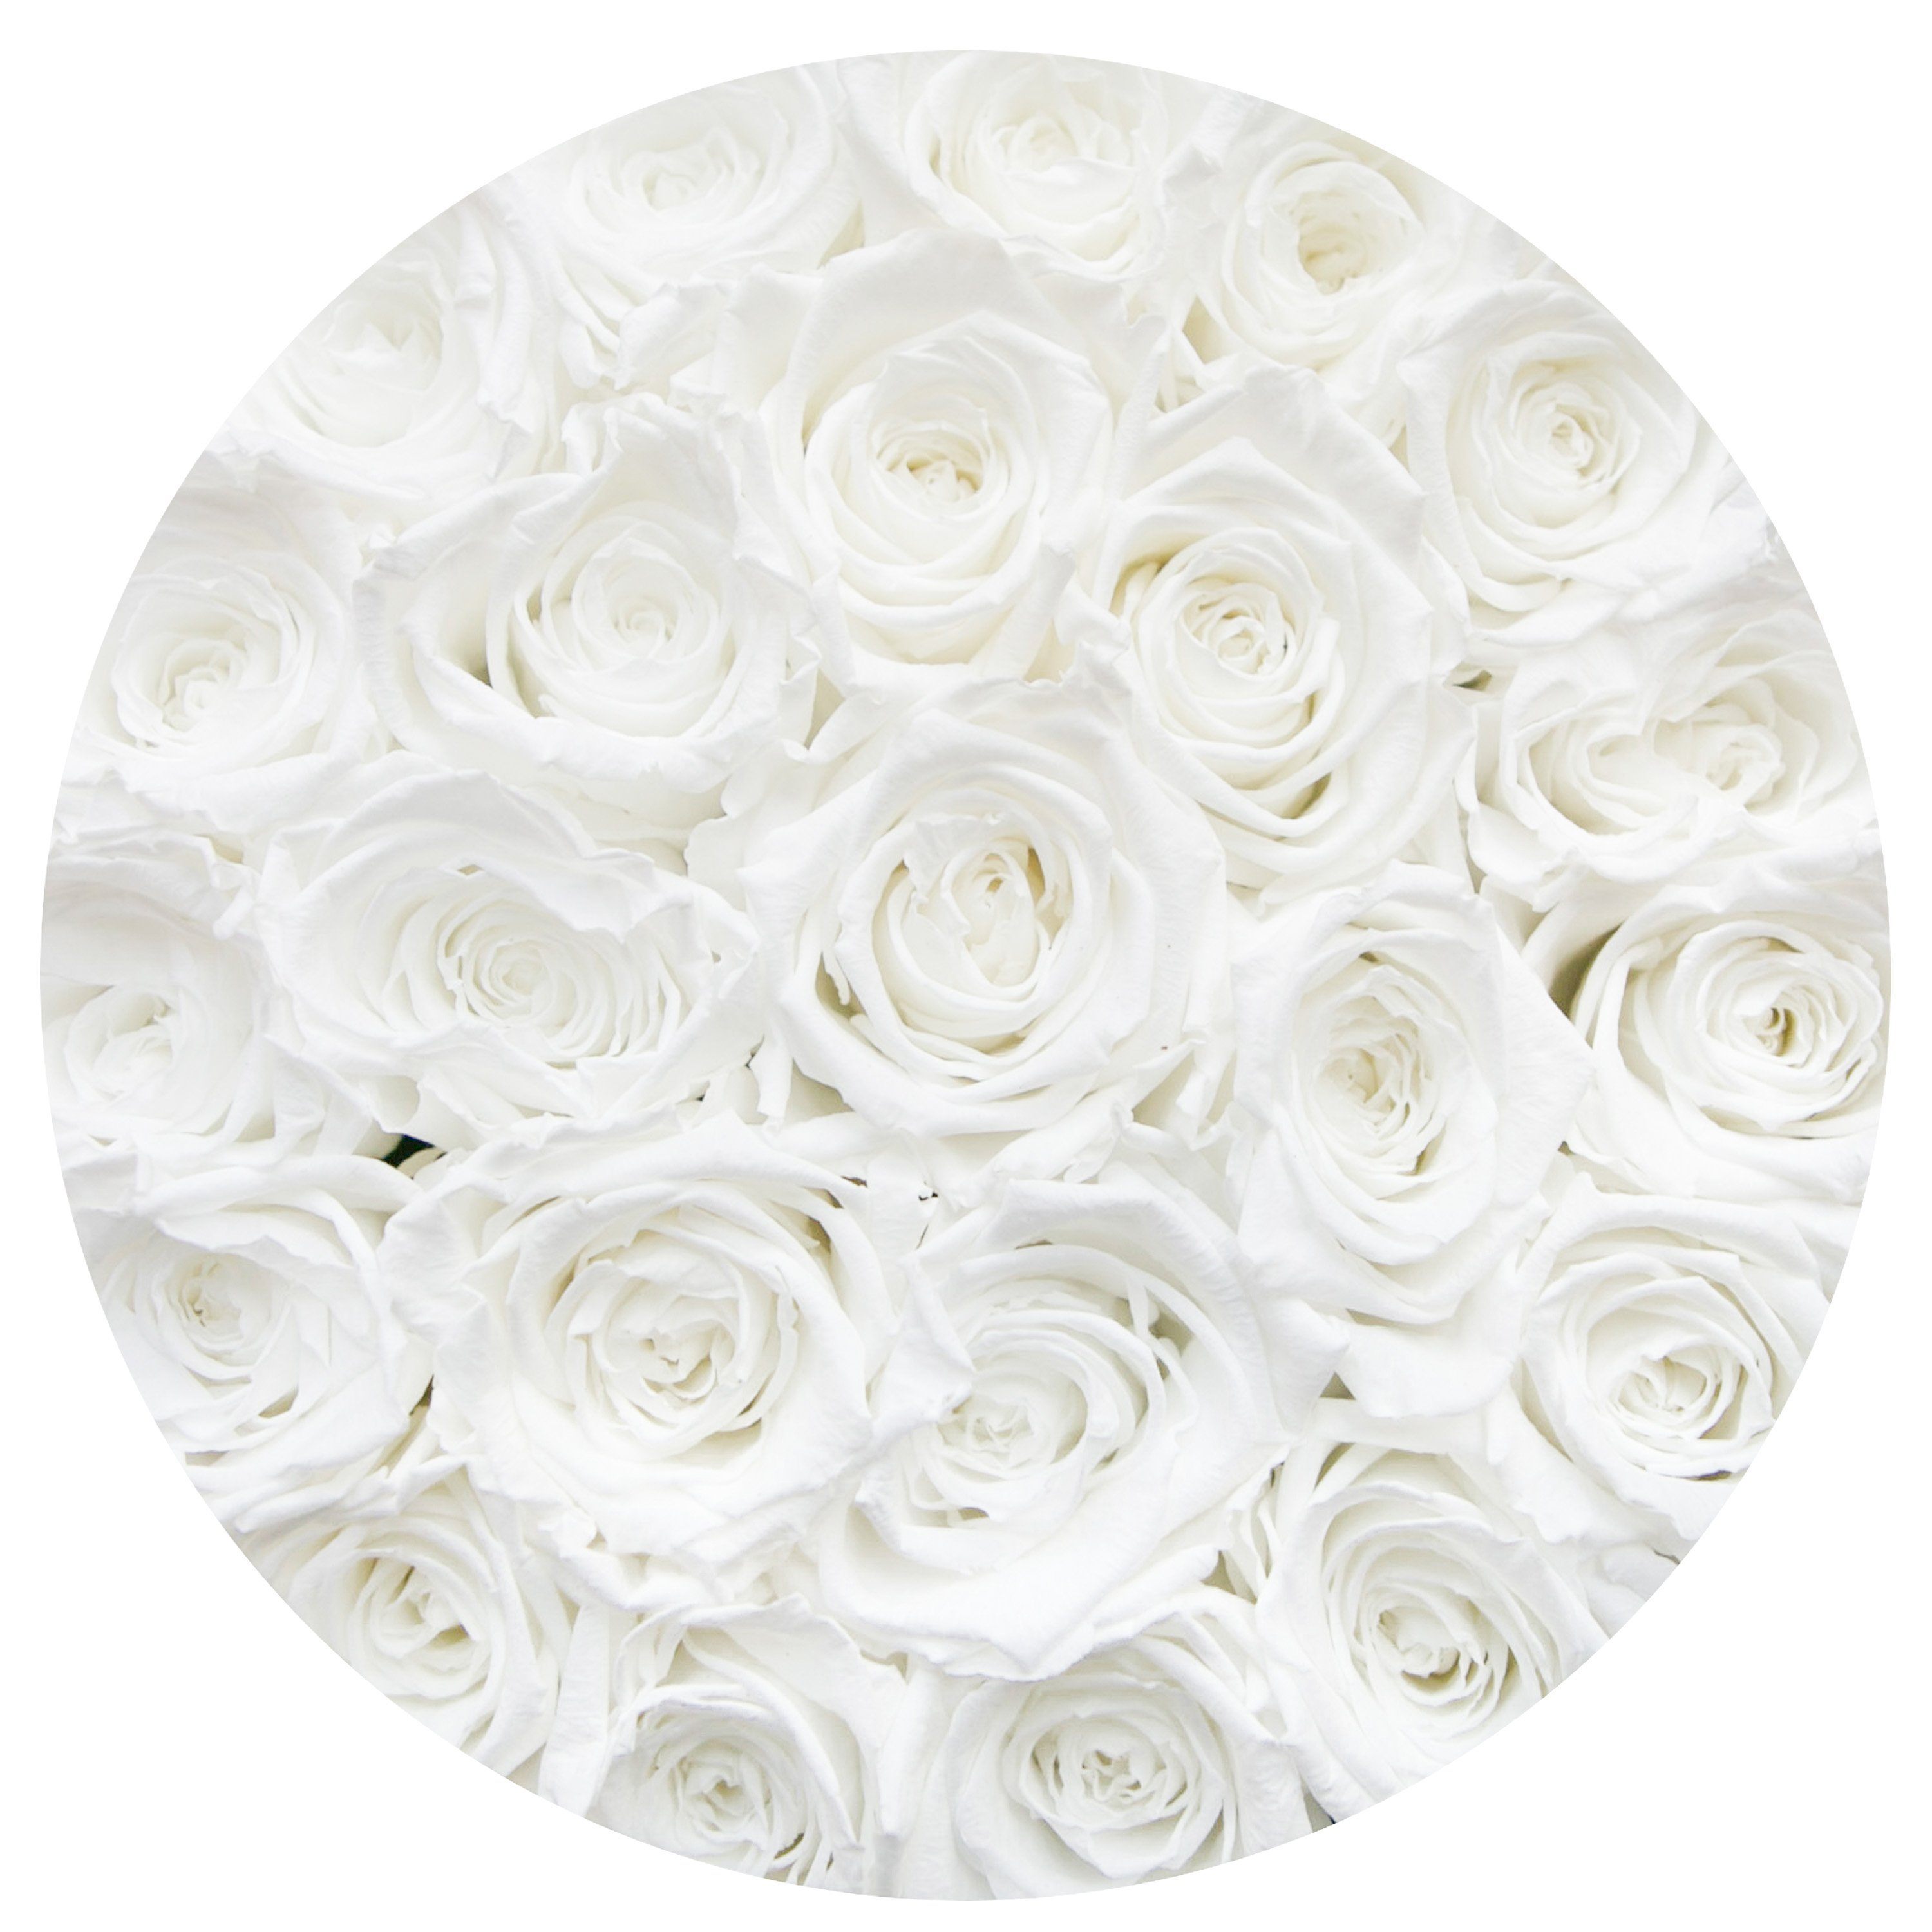 classic round box - black - white roses white eternity roses - the million roses